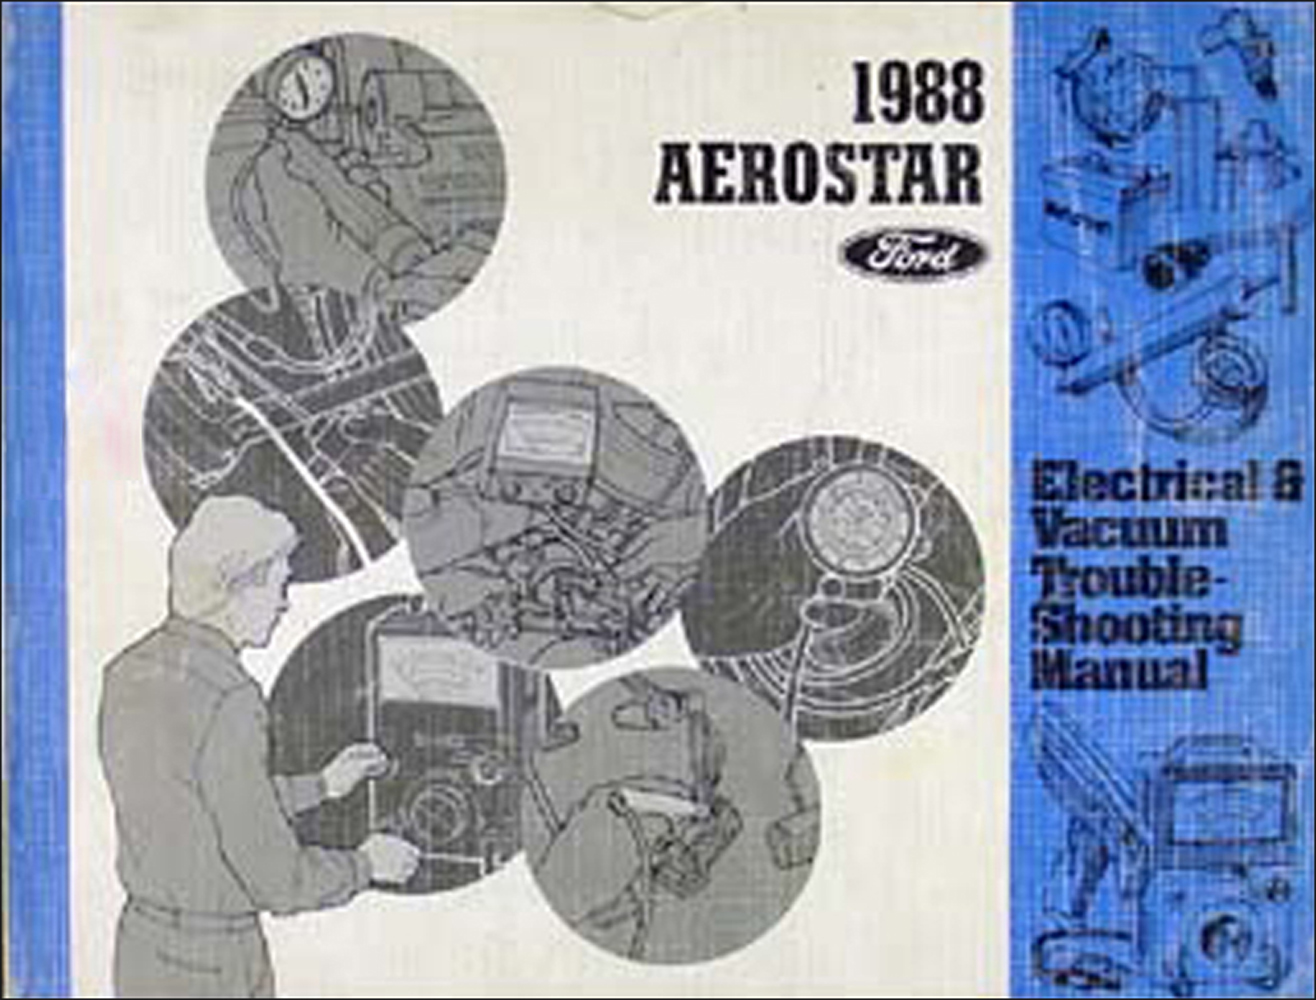 1988 Ford Aerostar Electrical & Vacuum Troubleshootng Manual Original 